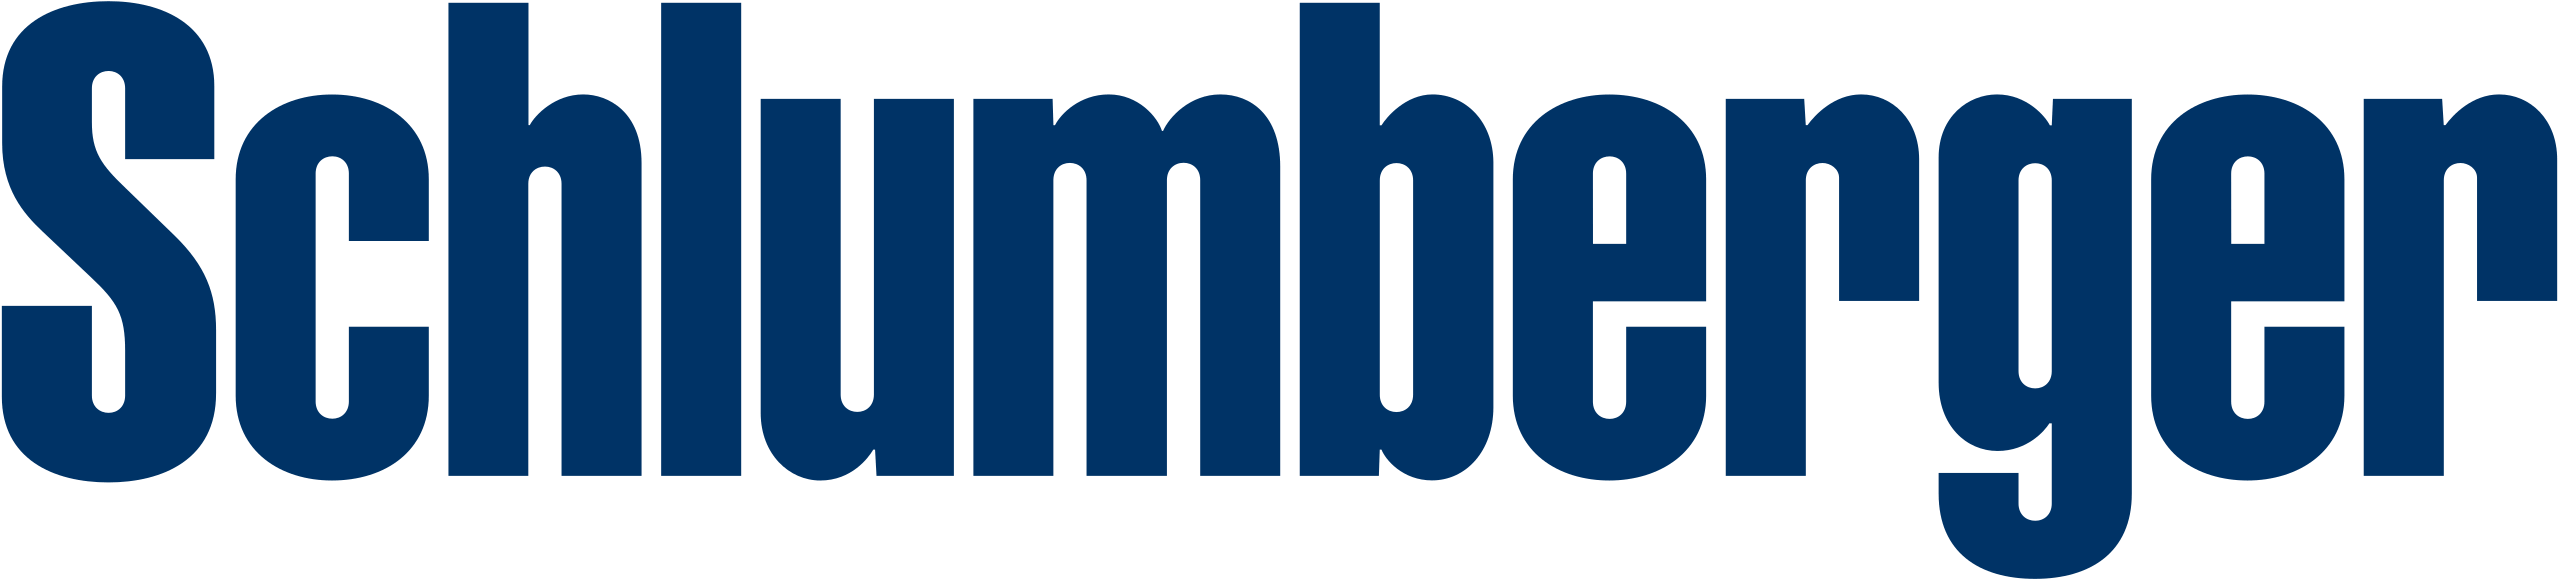 Logo de Schlumberger, partenaire du cabinet d’expert comptable FT Consulting.